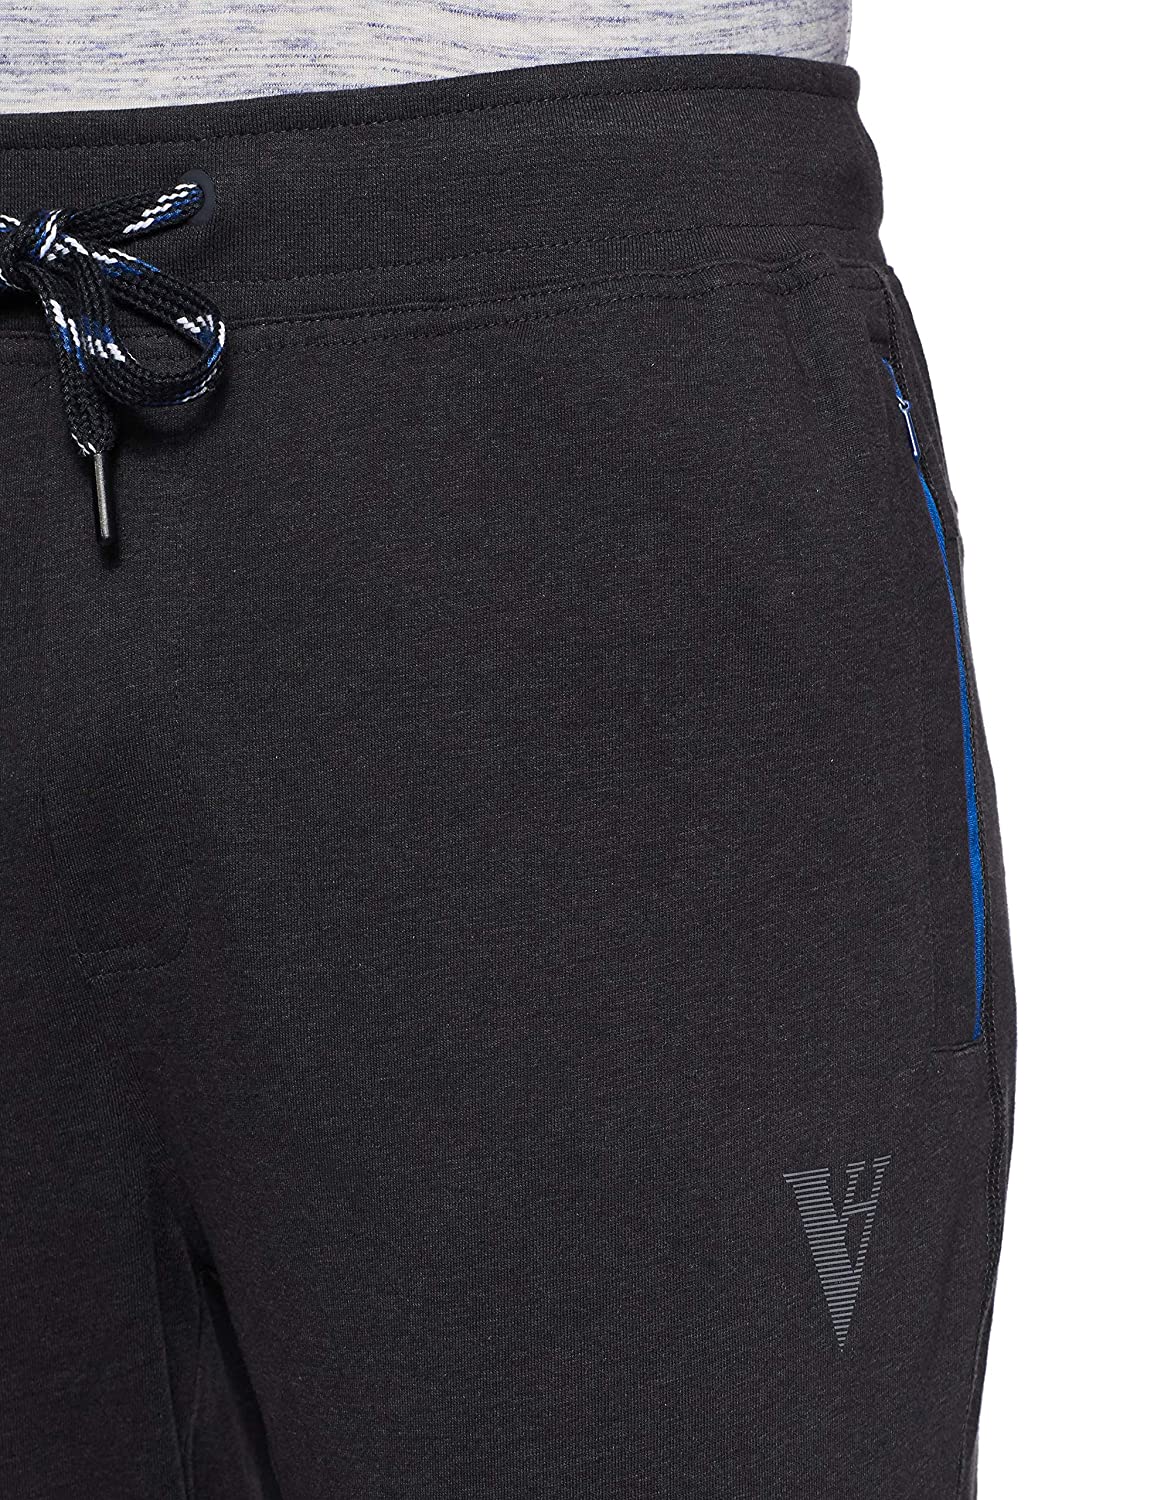 Van Heusen Casual Gym Wear Men's Track Pants Dark grey - Stilento